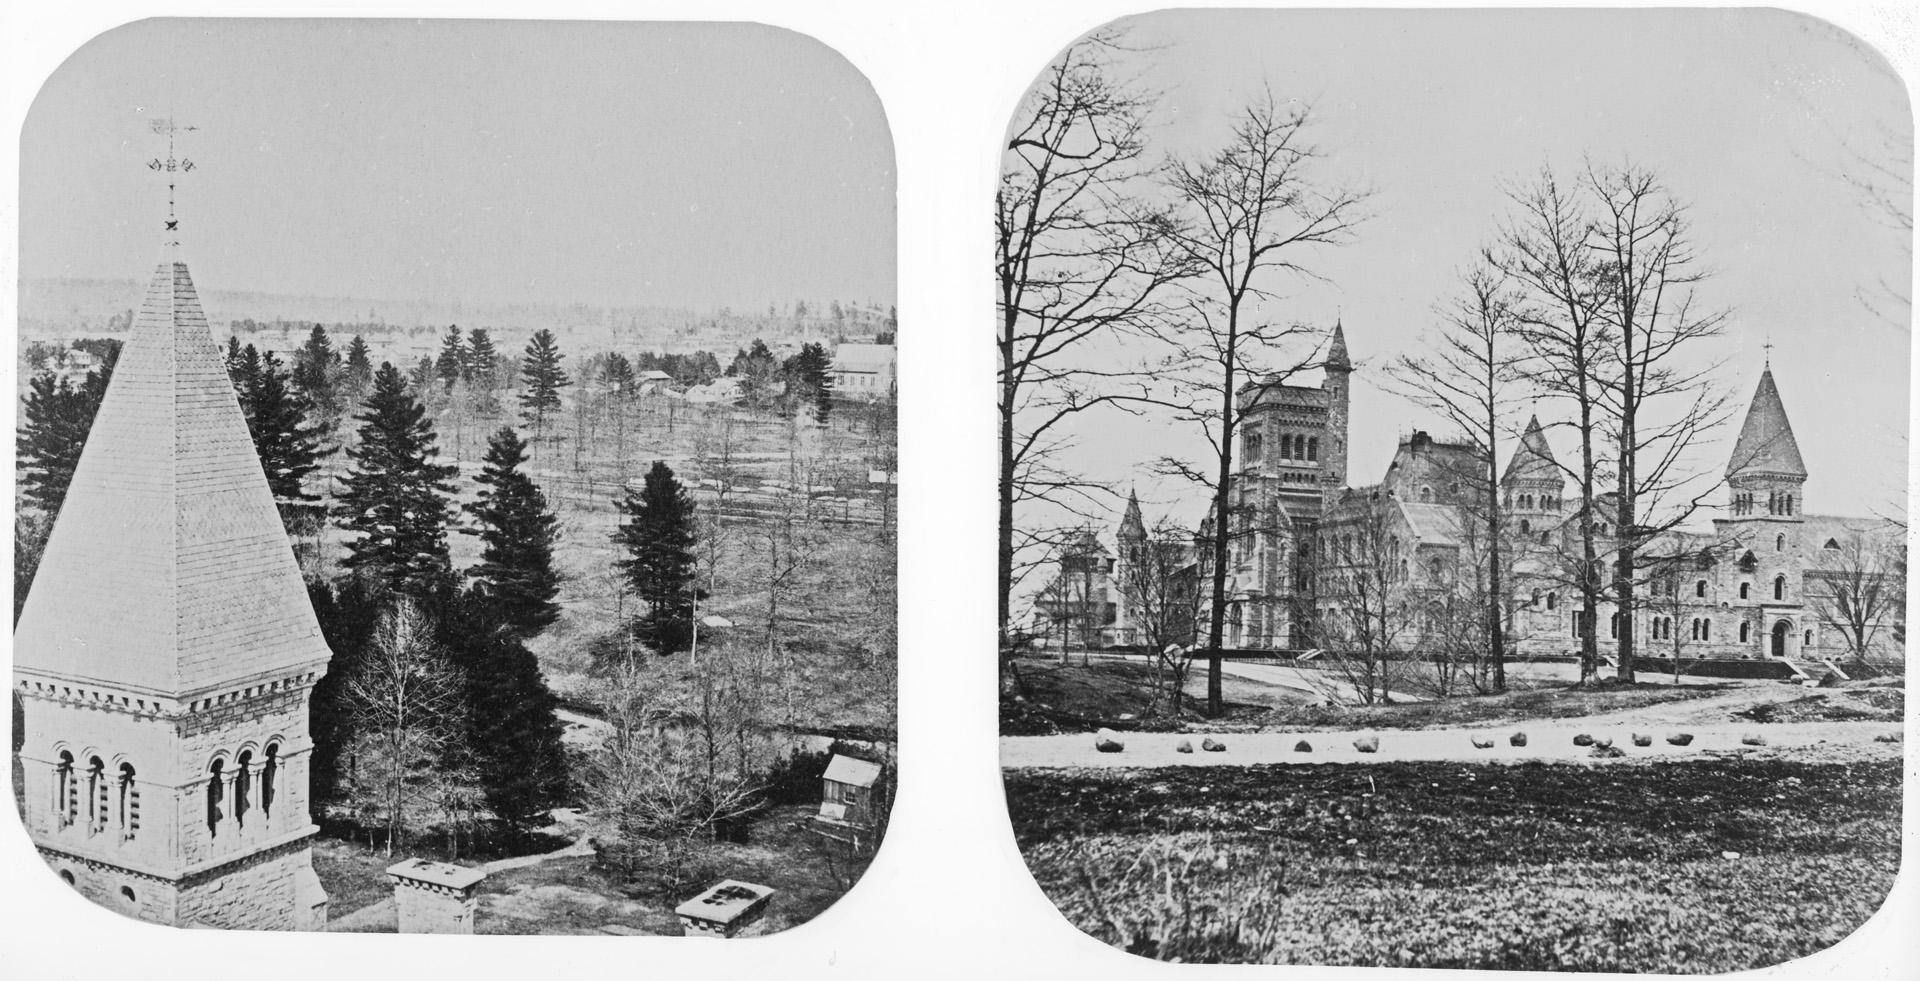 University College (circa 1859)